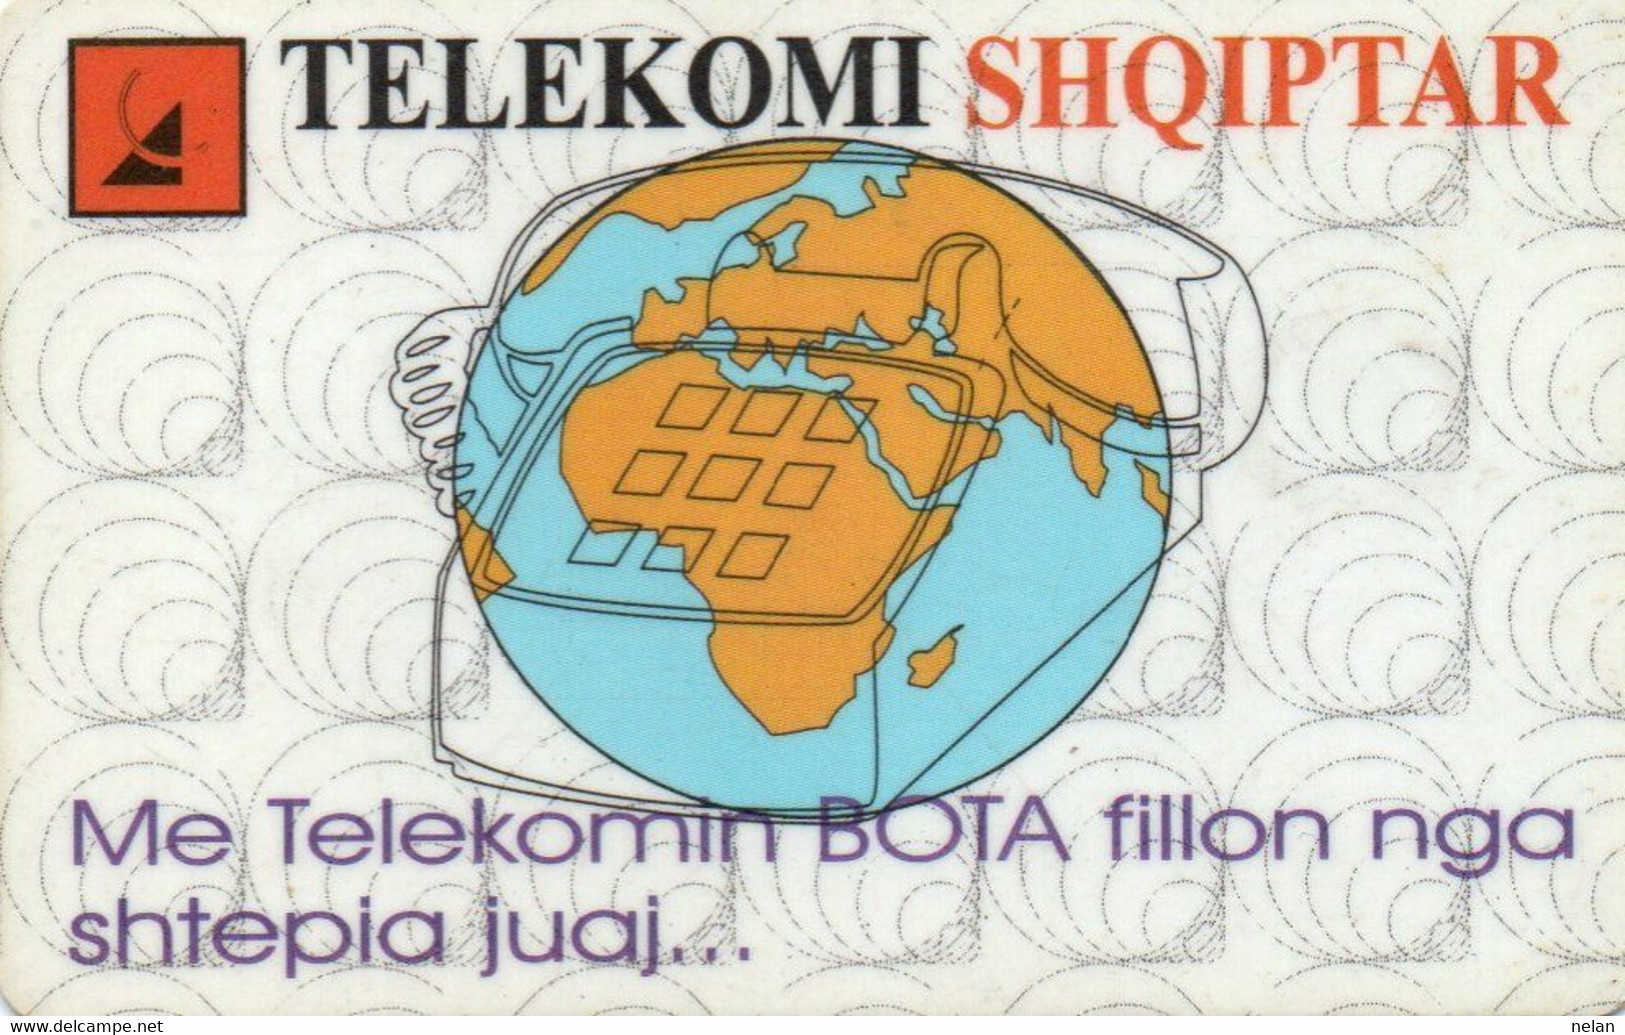 PHONE CARD - TELEKOMI SHQIPTAR - Albanien